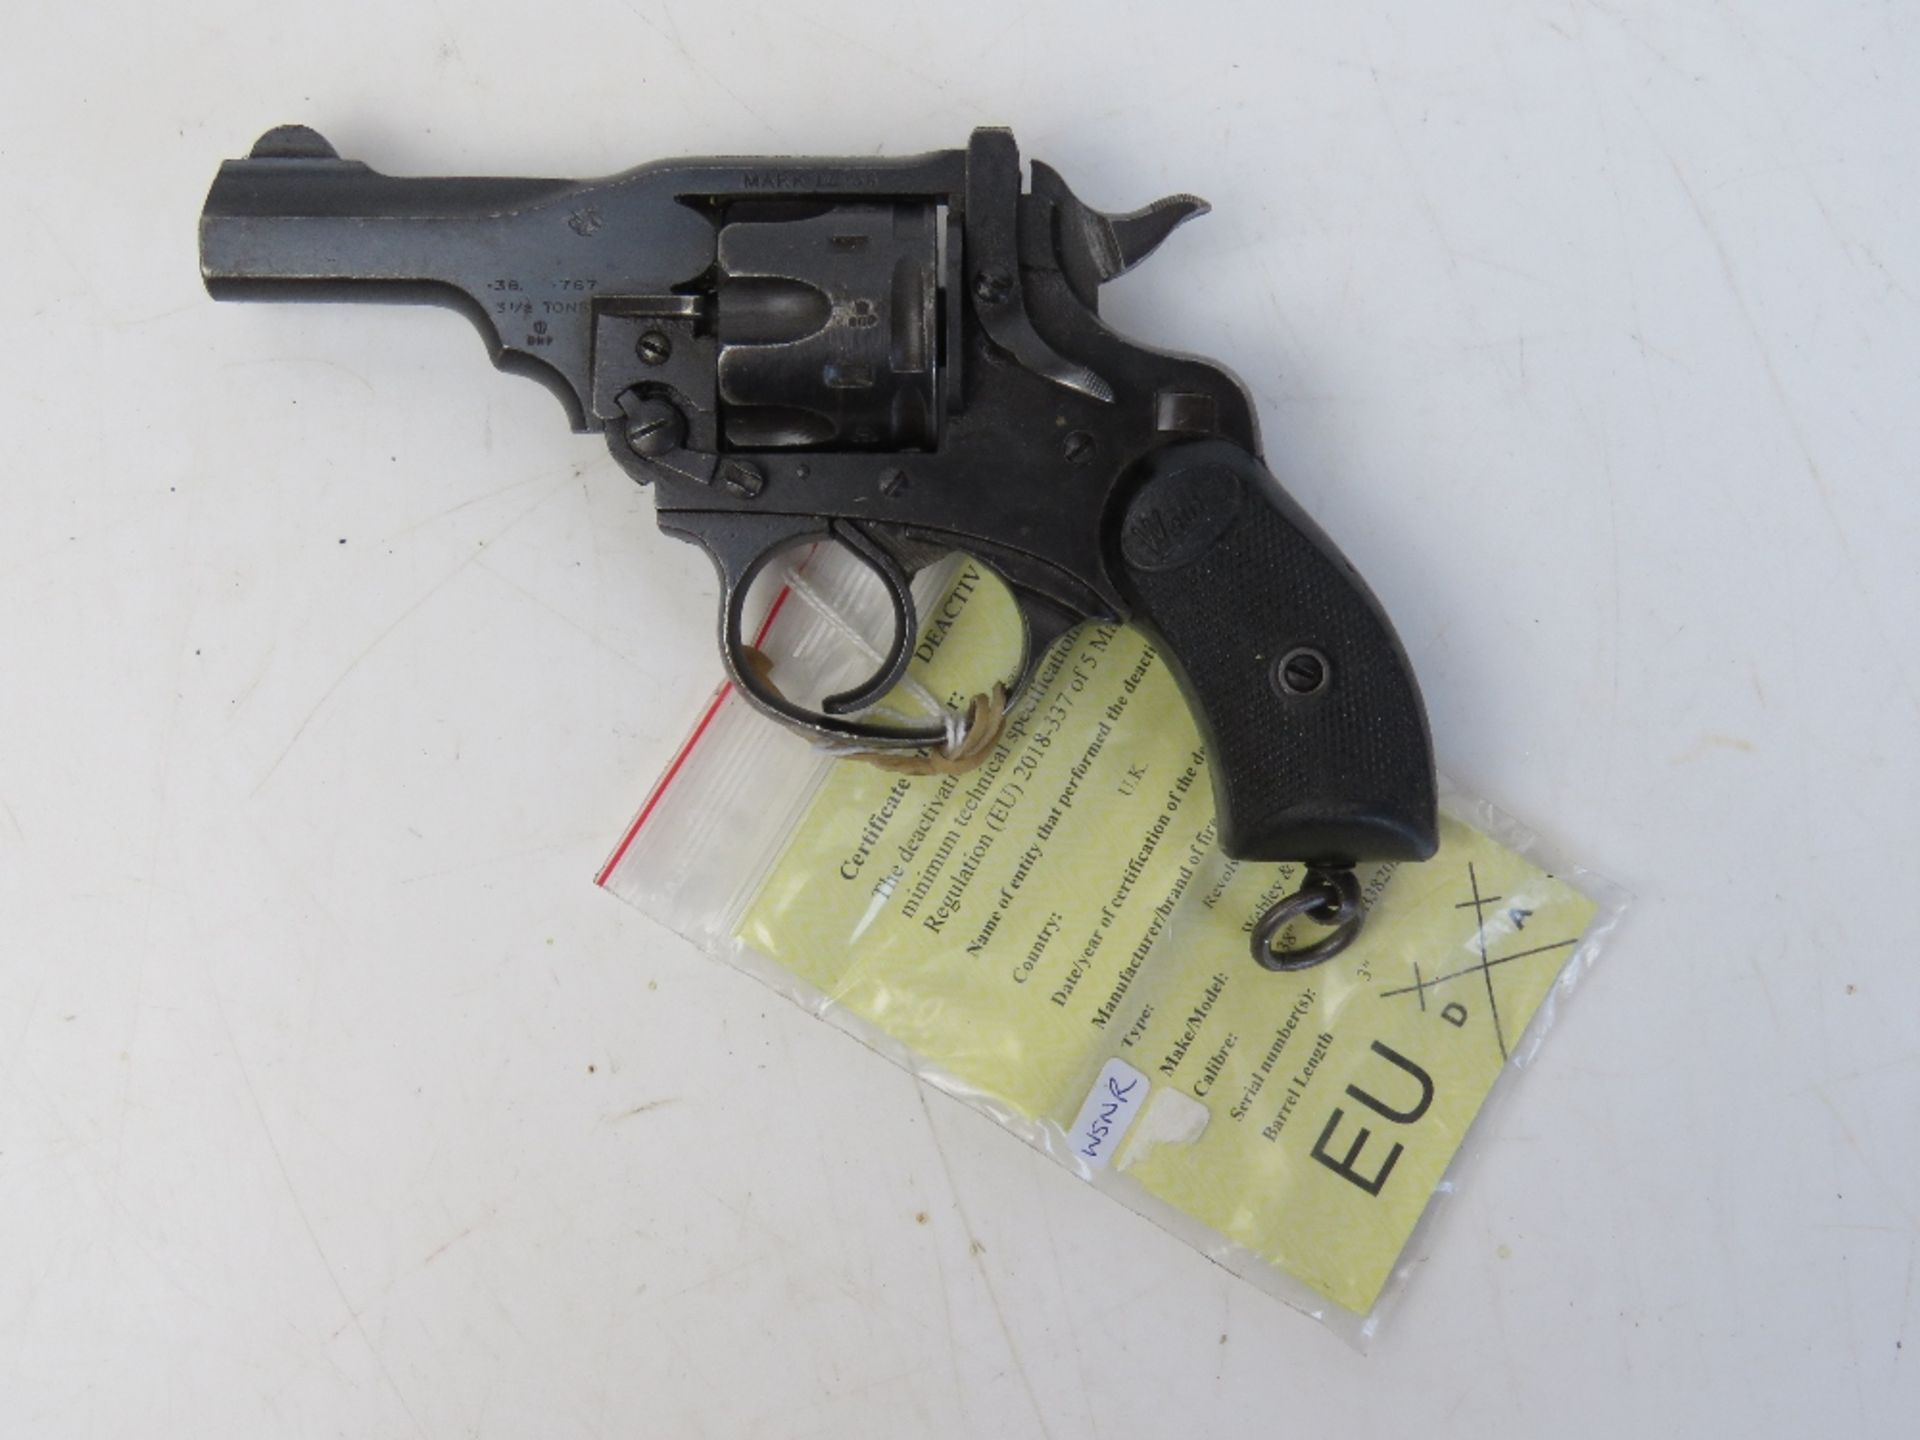 A deactivated Webley MK IV snub nosed revolver.